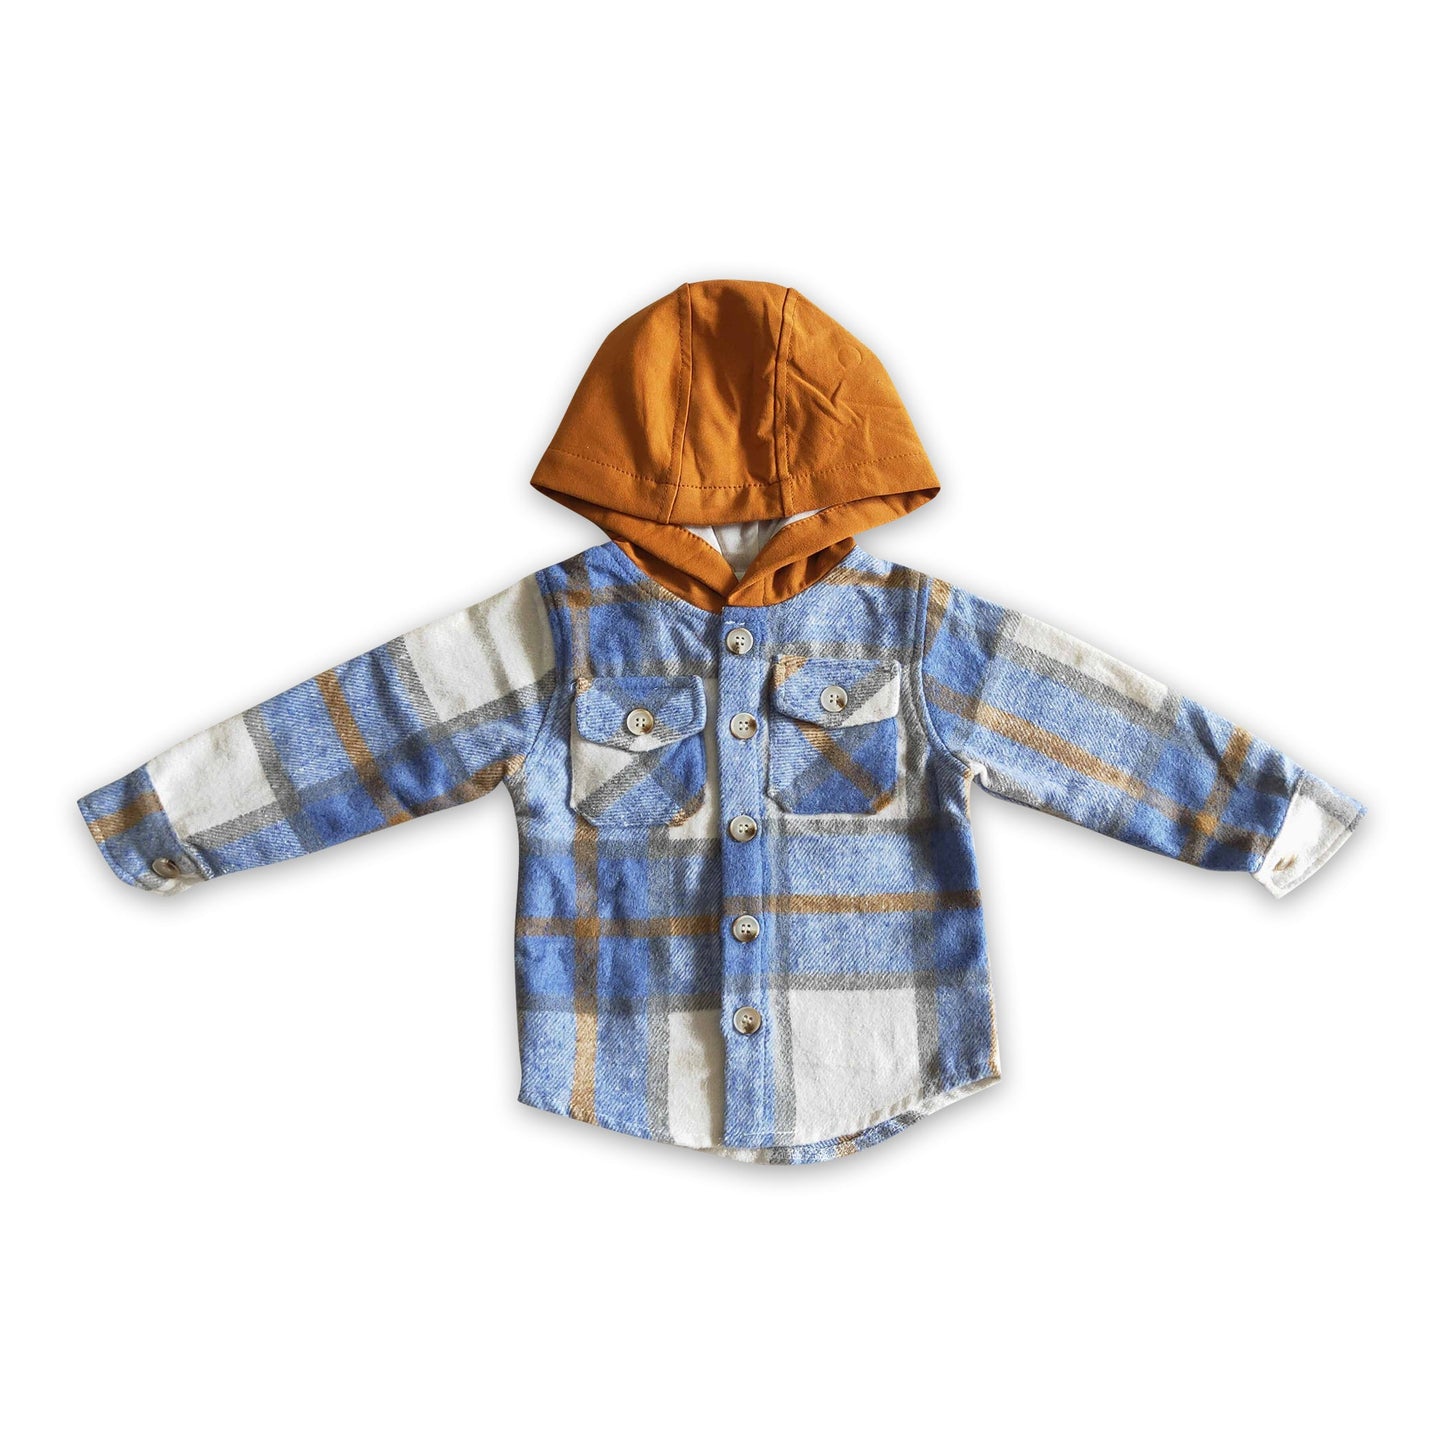 Blue plaid cotton shirt pocket boy thick flannel button up hoodie